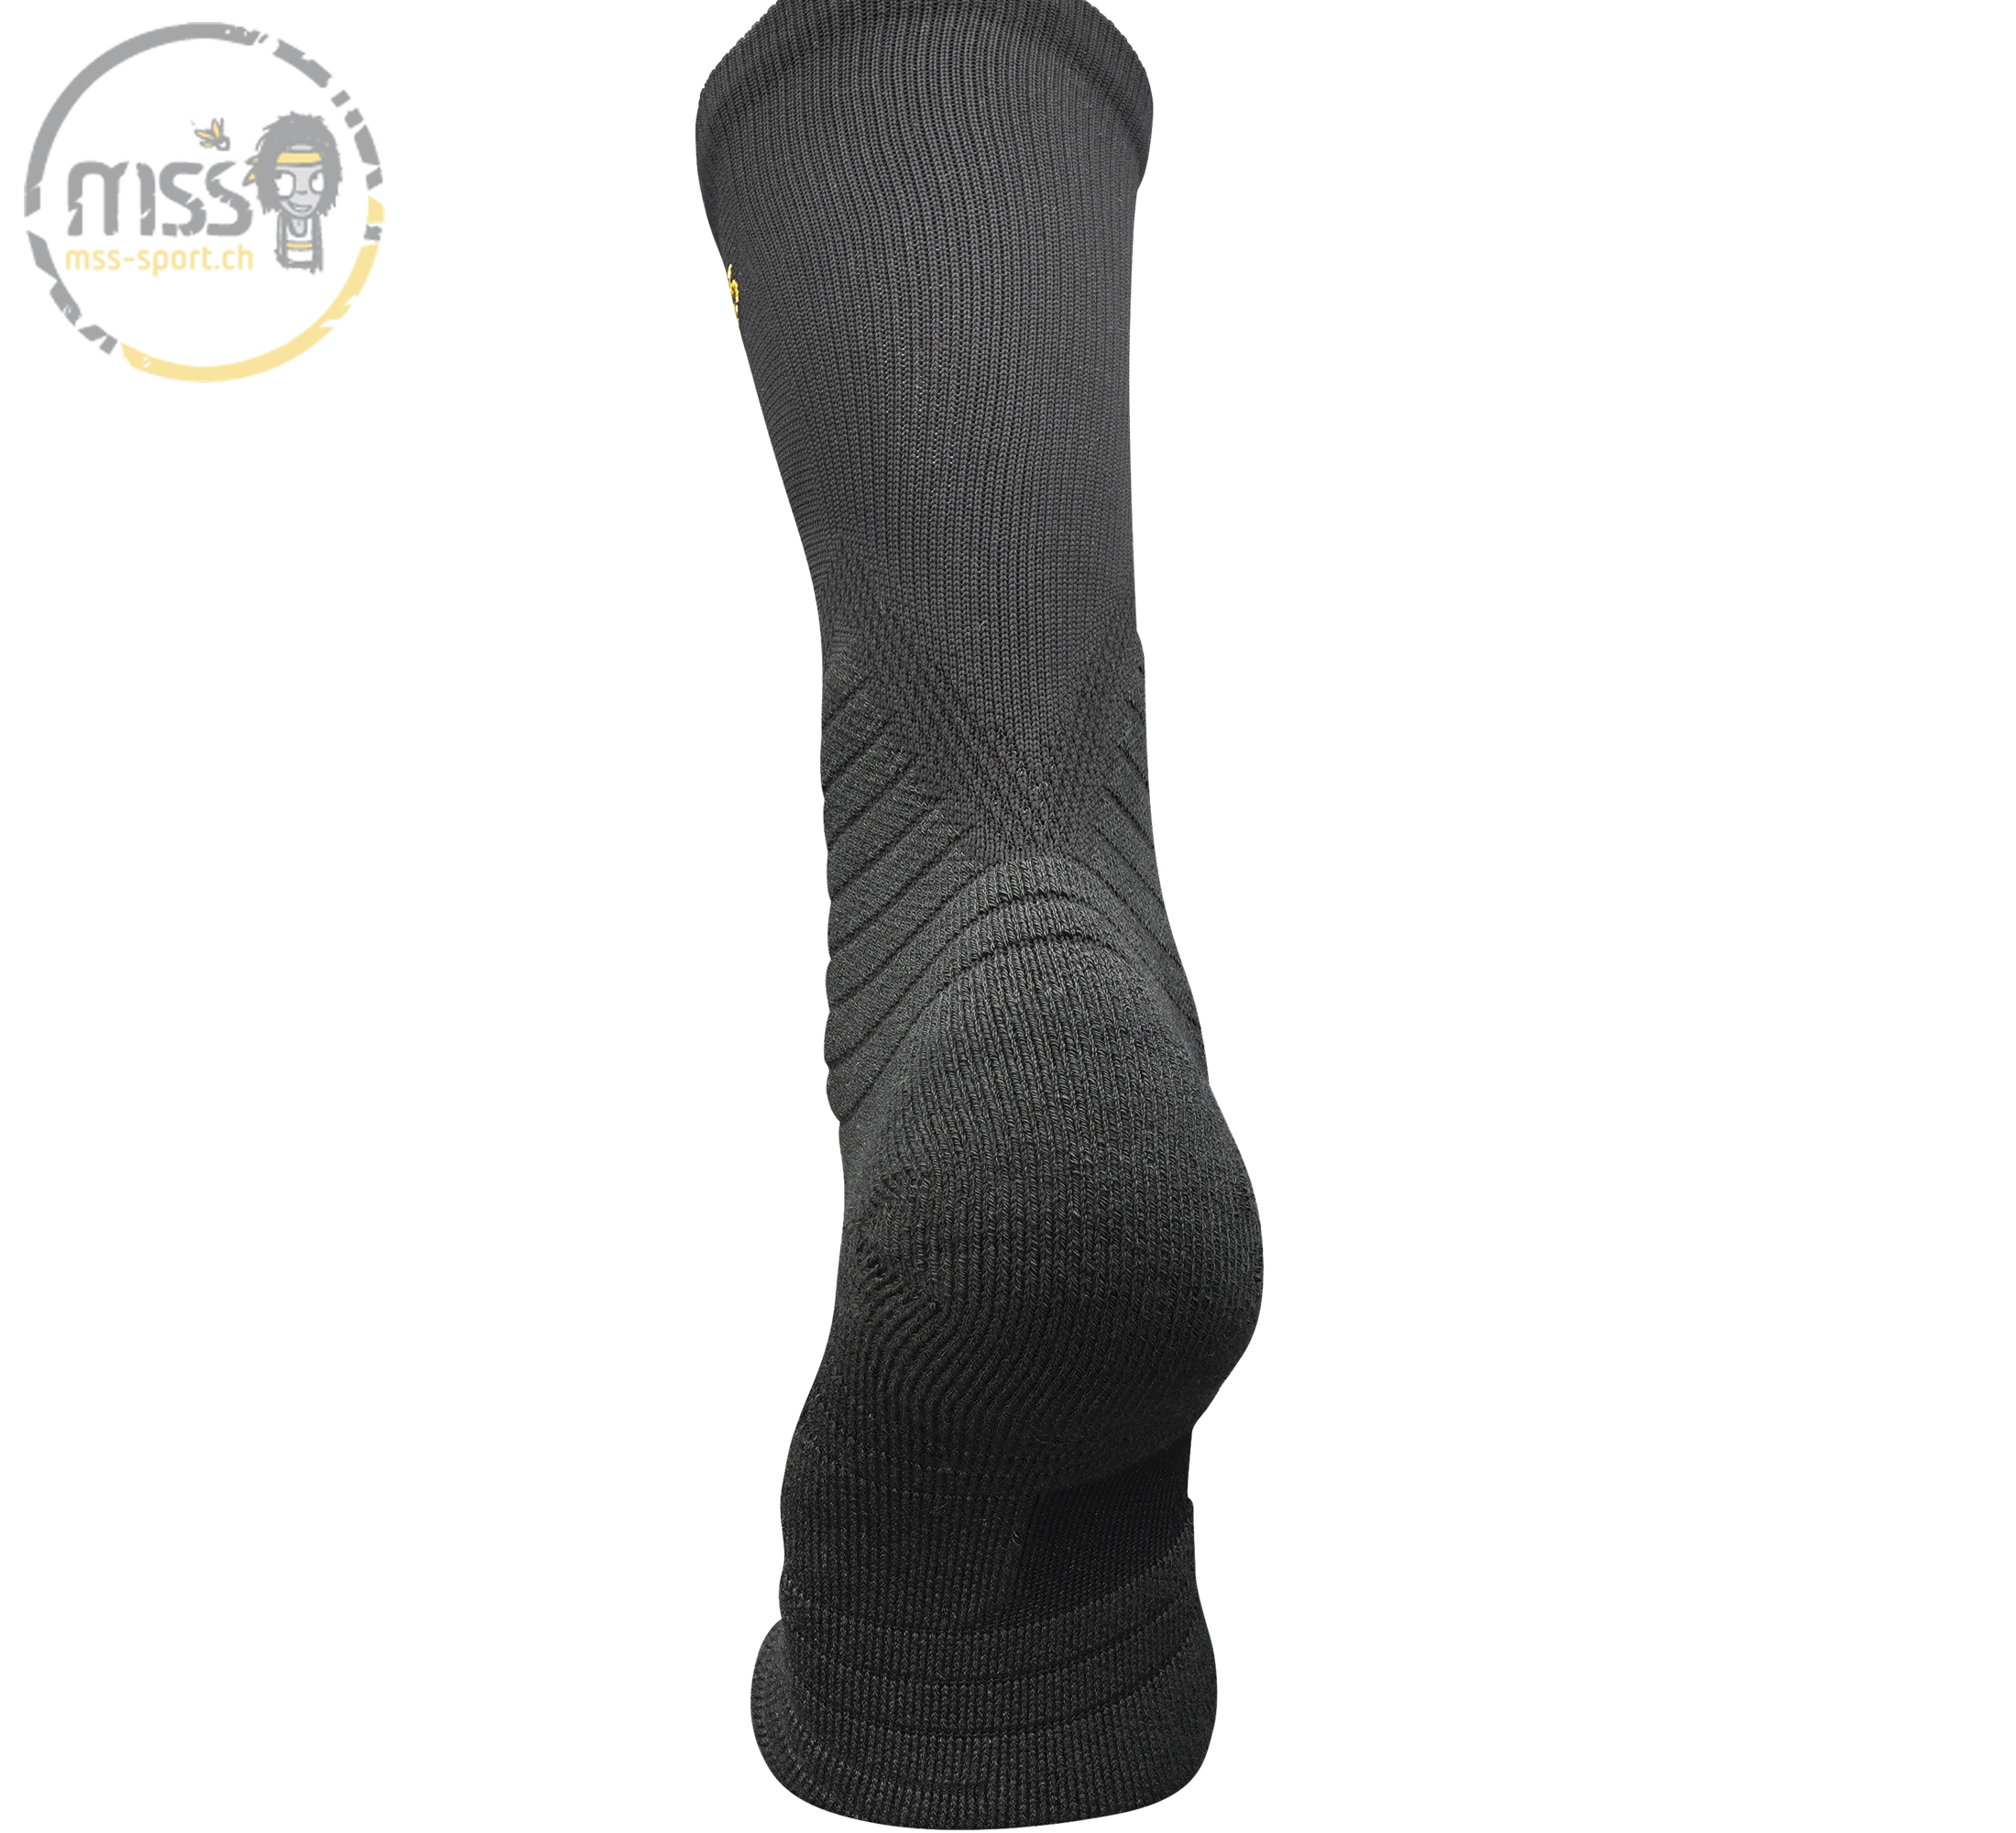 mss-socks Smash 5700 high black